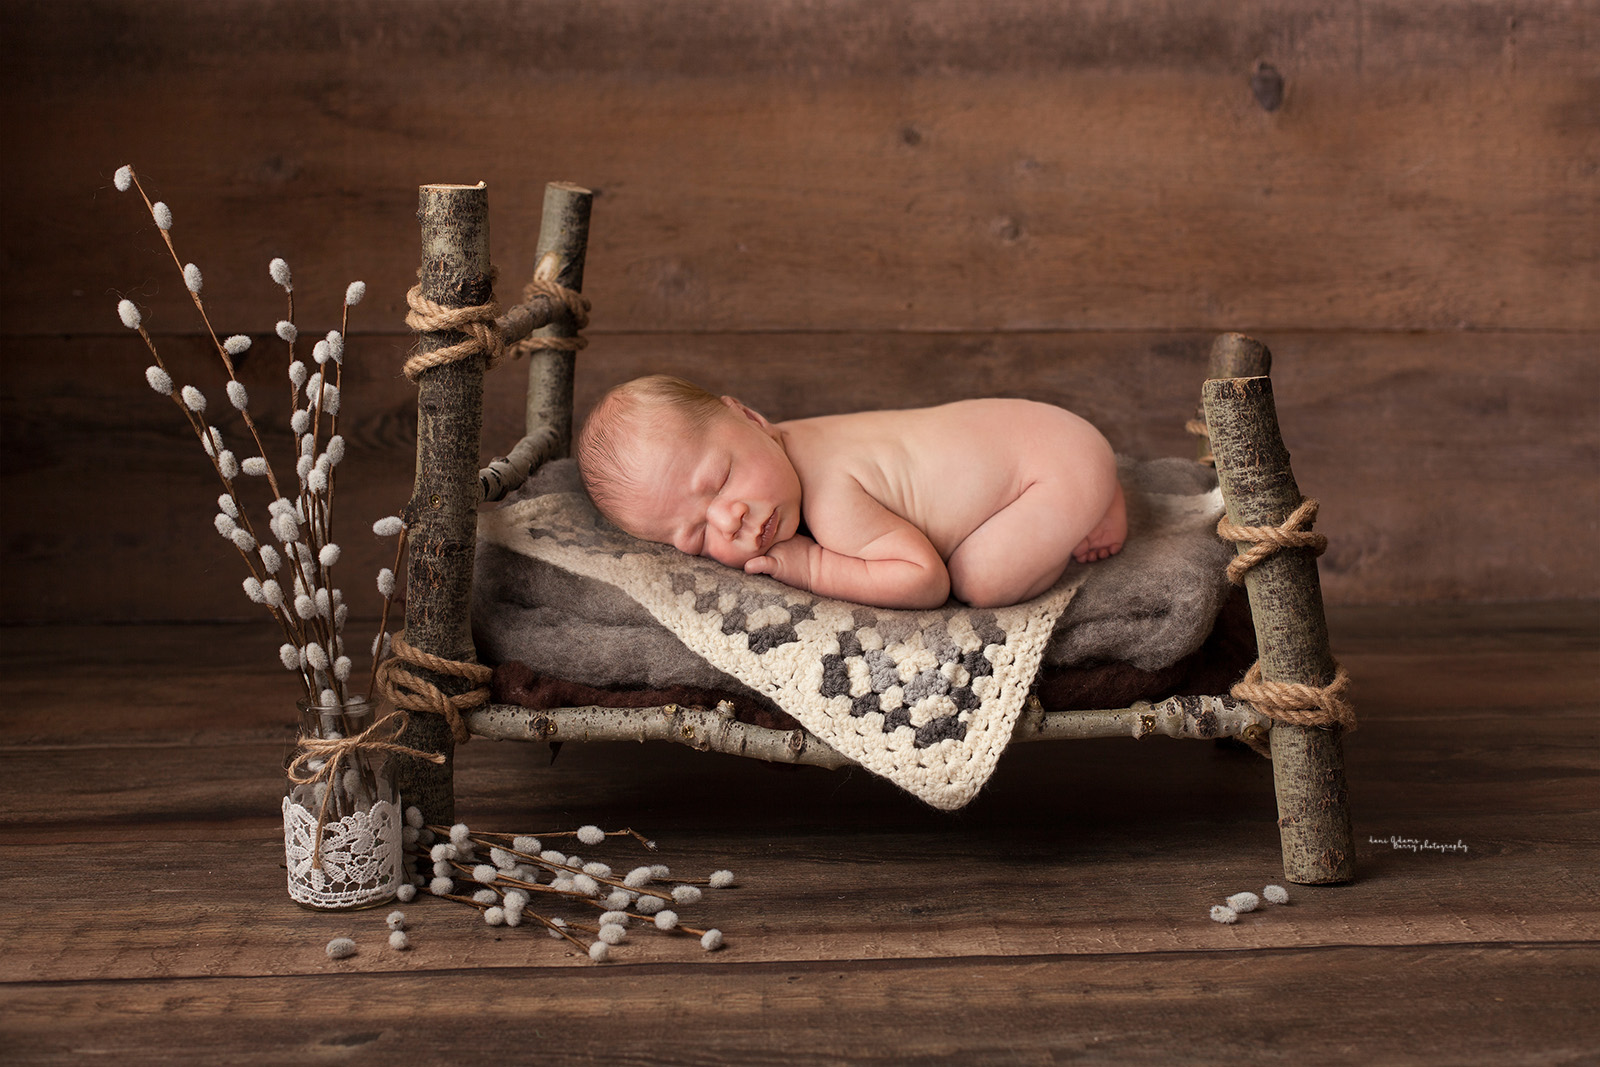 Country Themed Newborn Photos - Newborn Photography